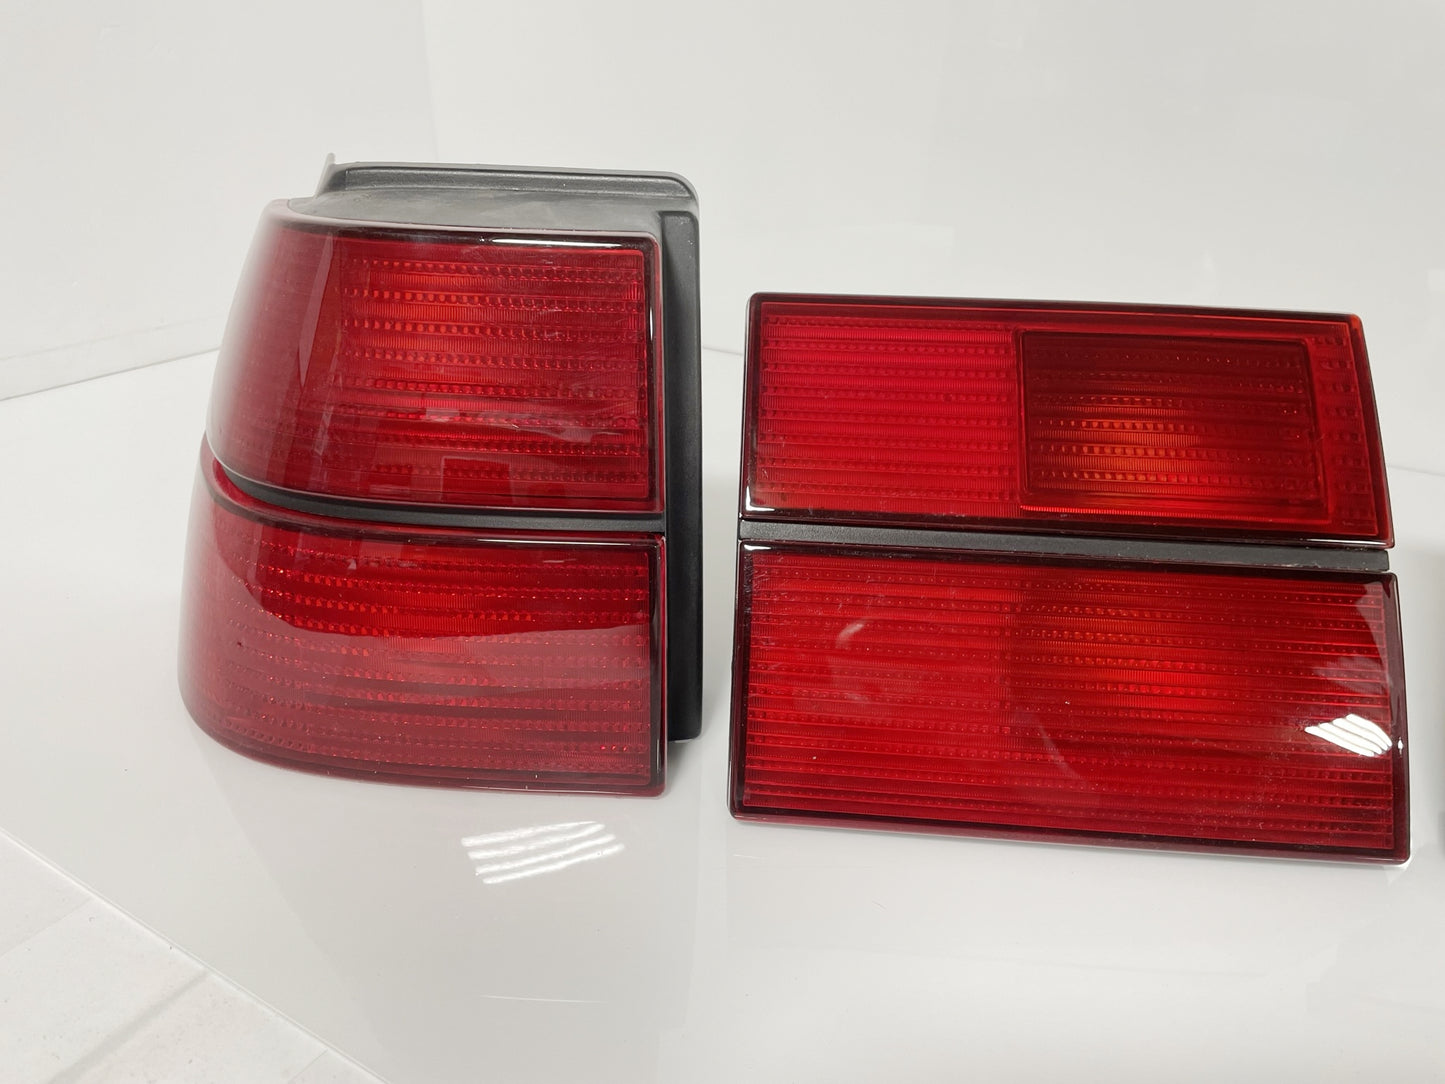 VW Corrado All Red Taillights